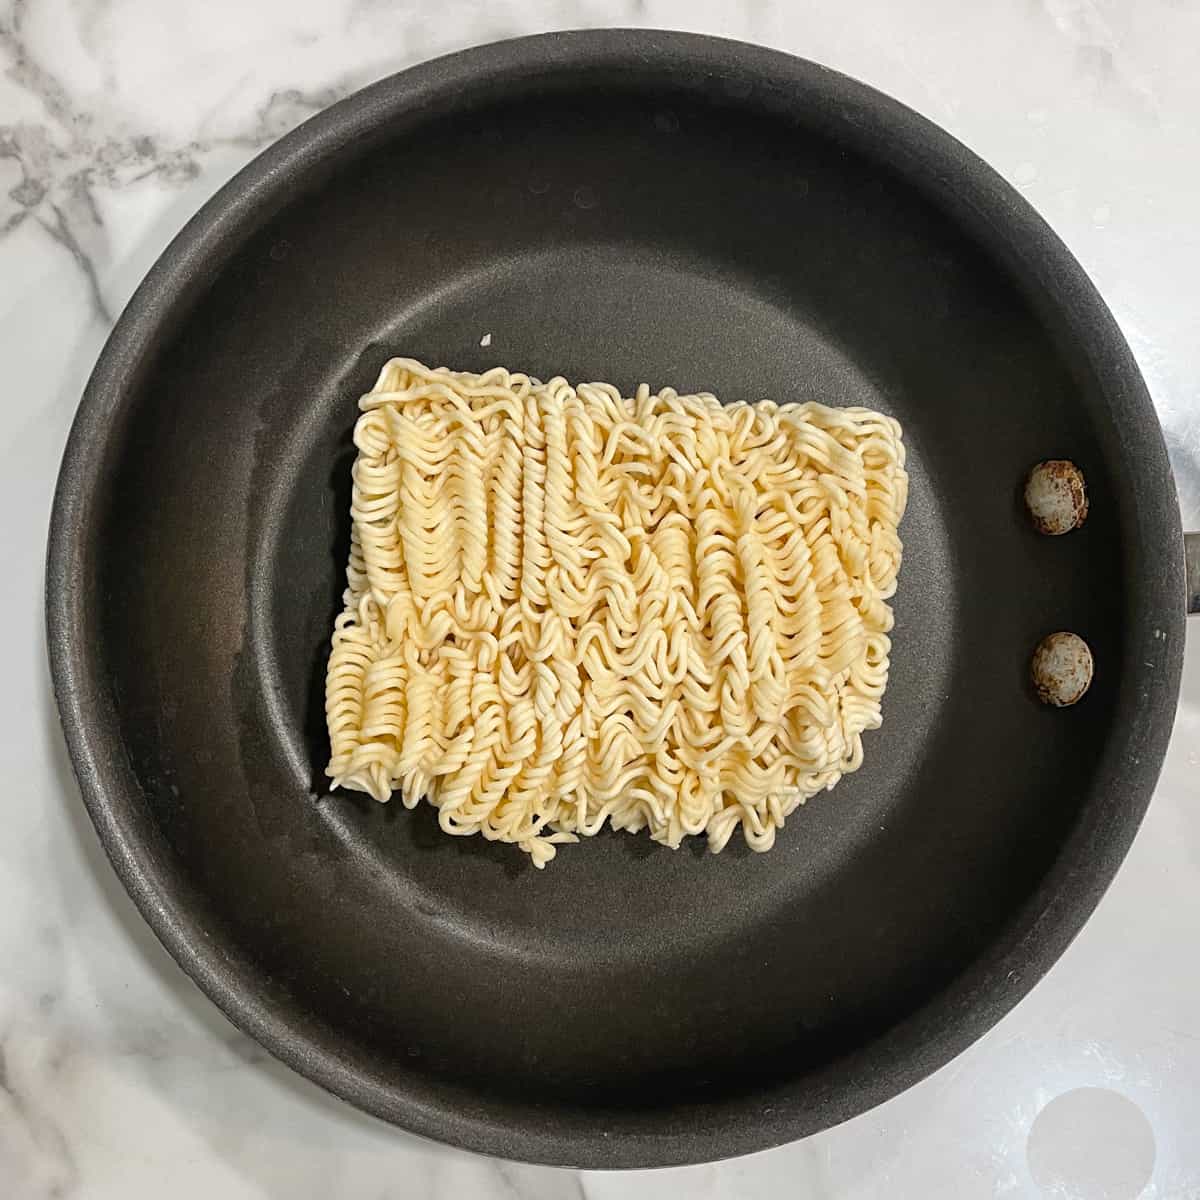 brick of raw ramen noodles in a pan